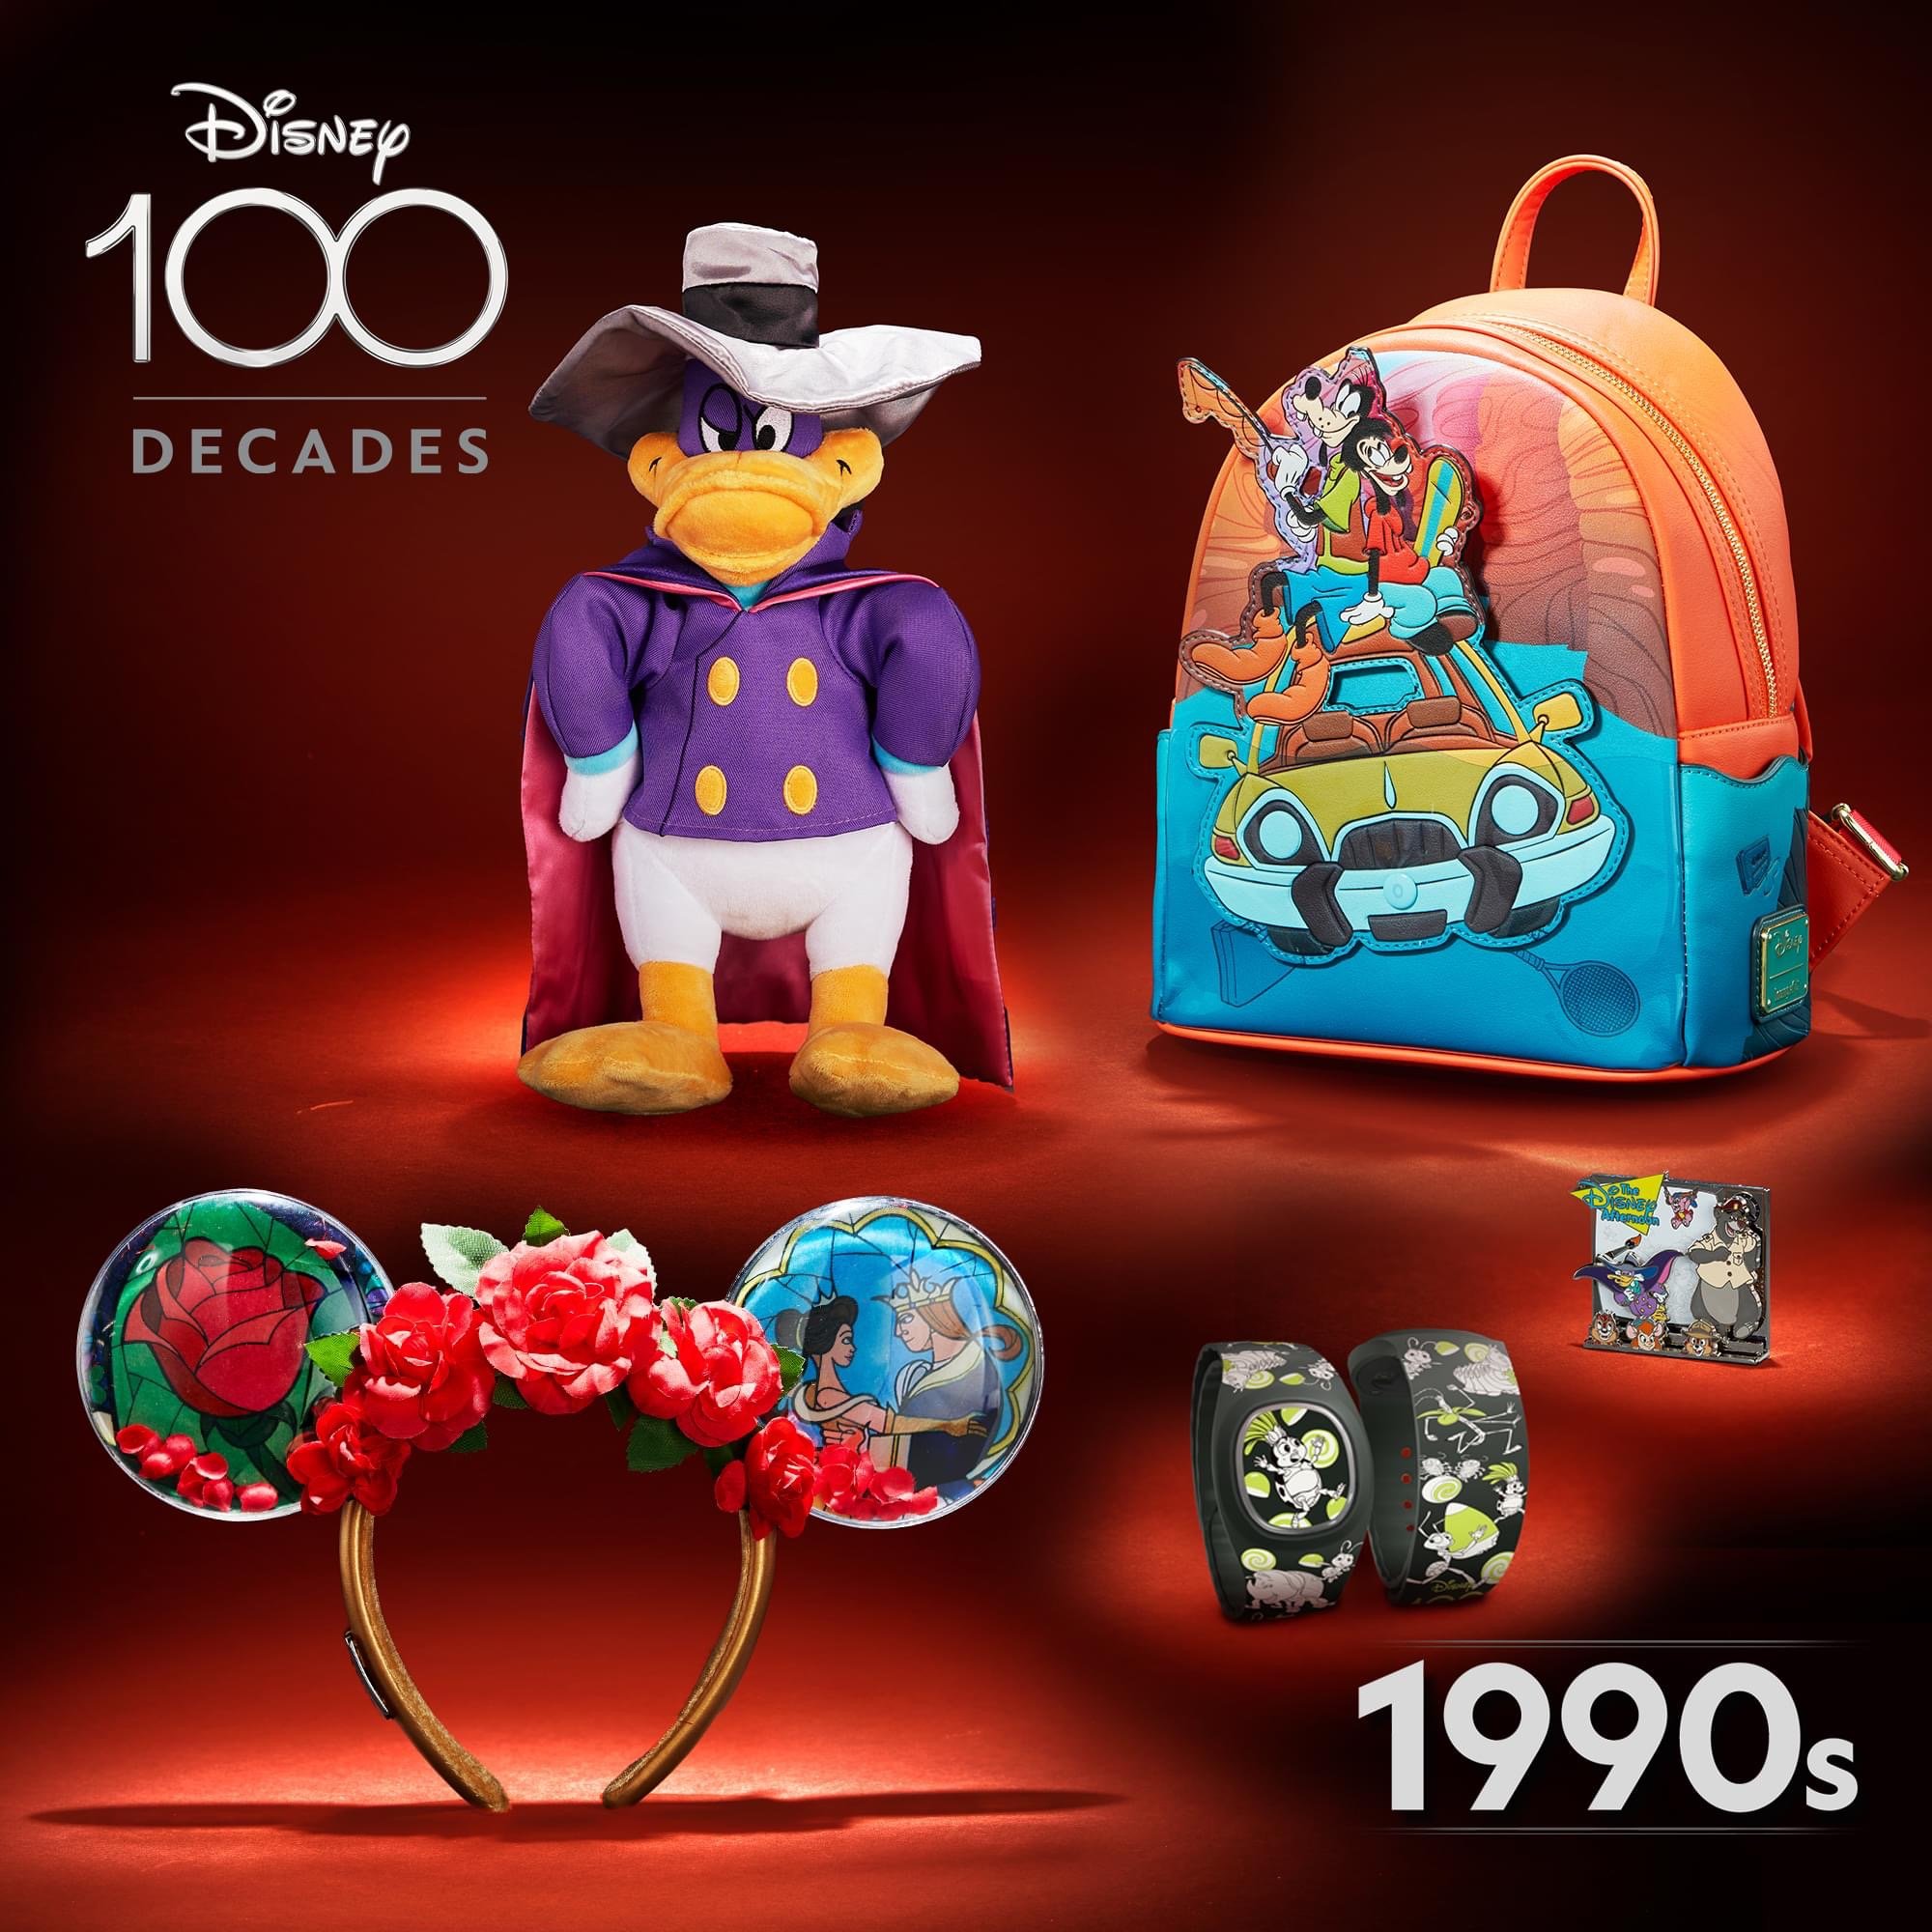 Disney100 Decades 1990s Collection on shopDisney — EXTRA MAGIC MINUTES